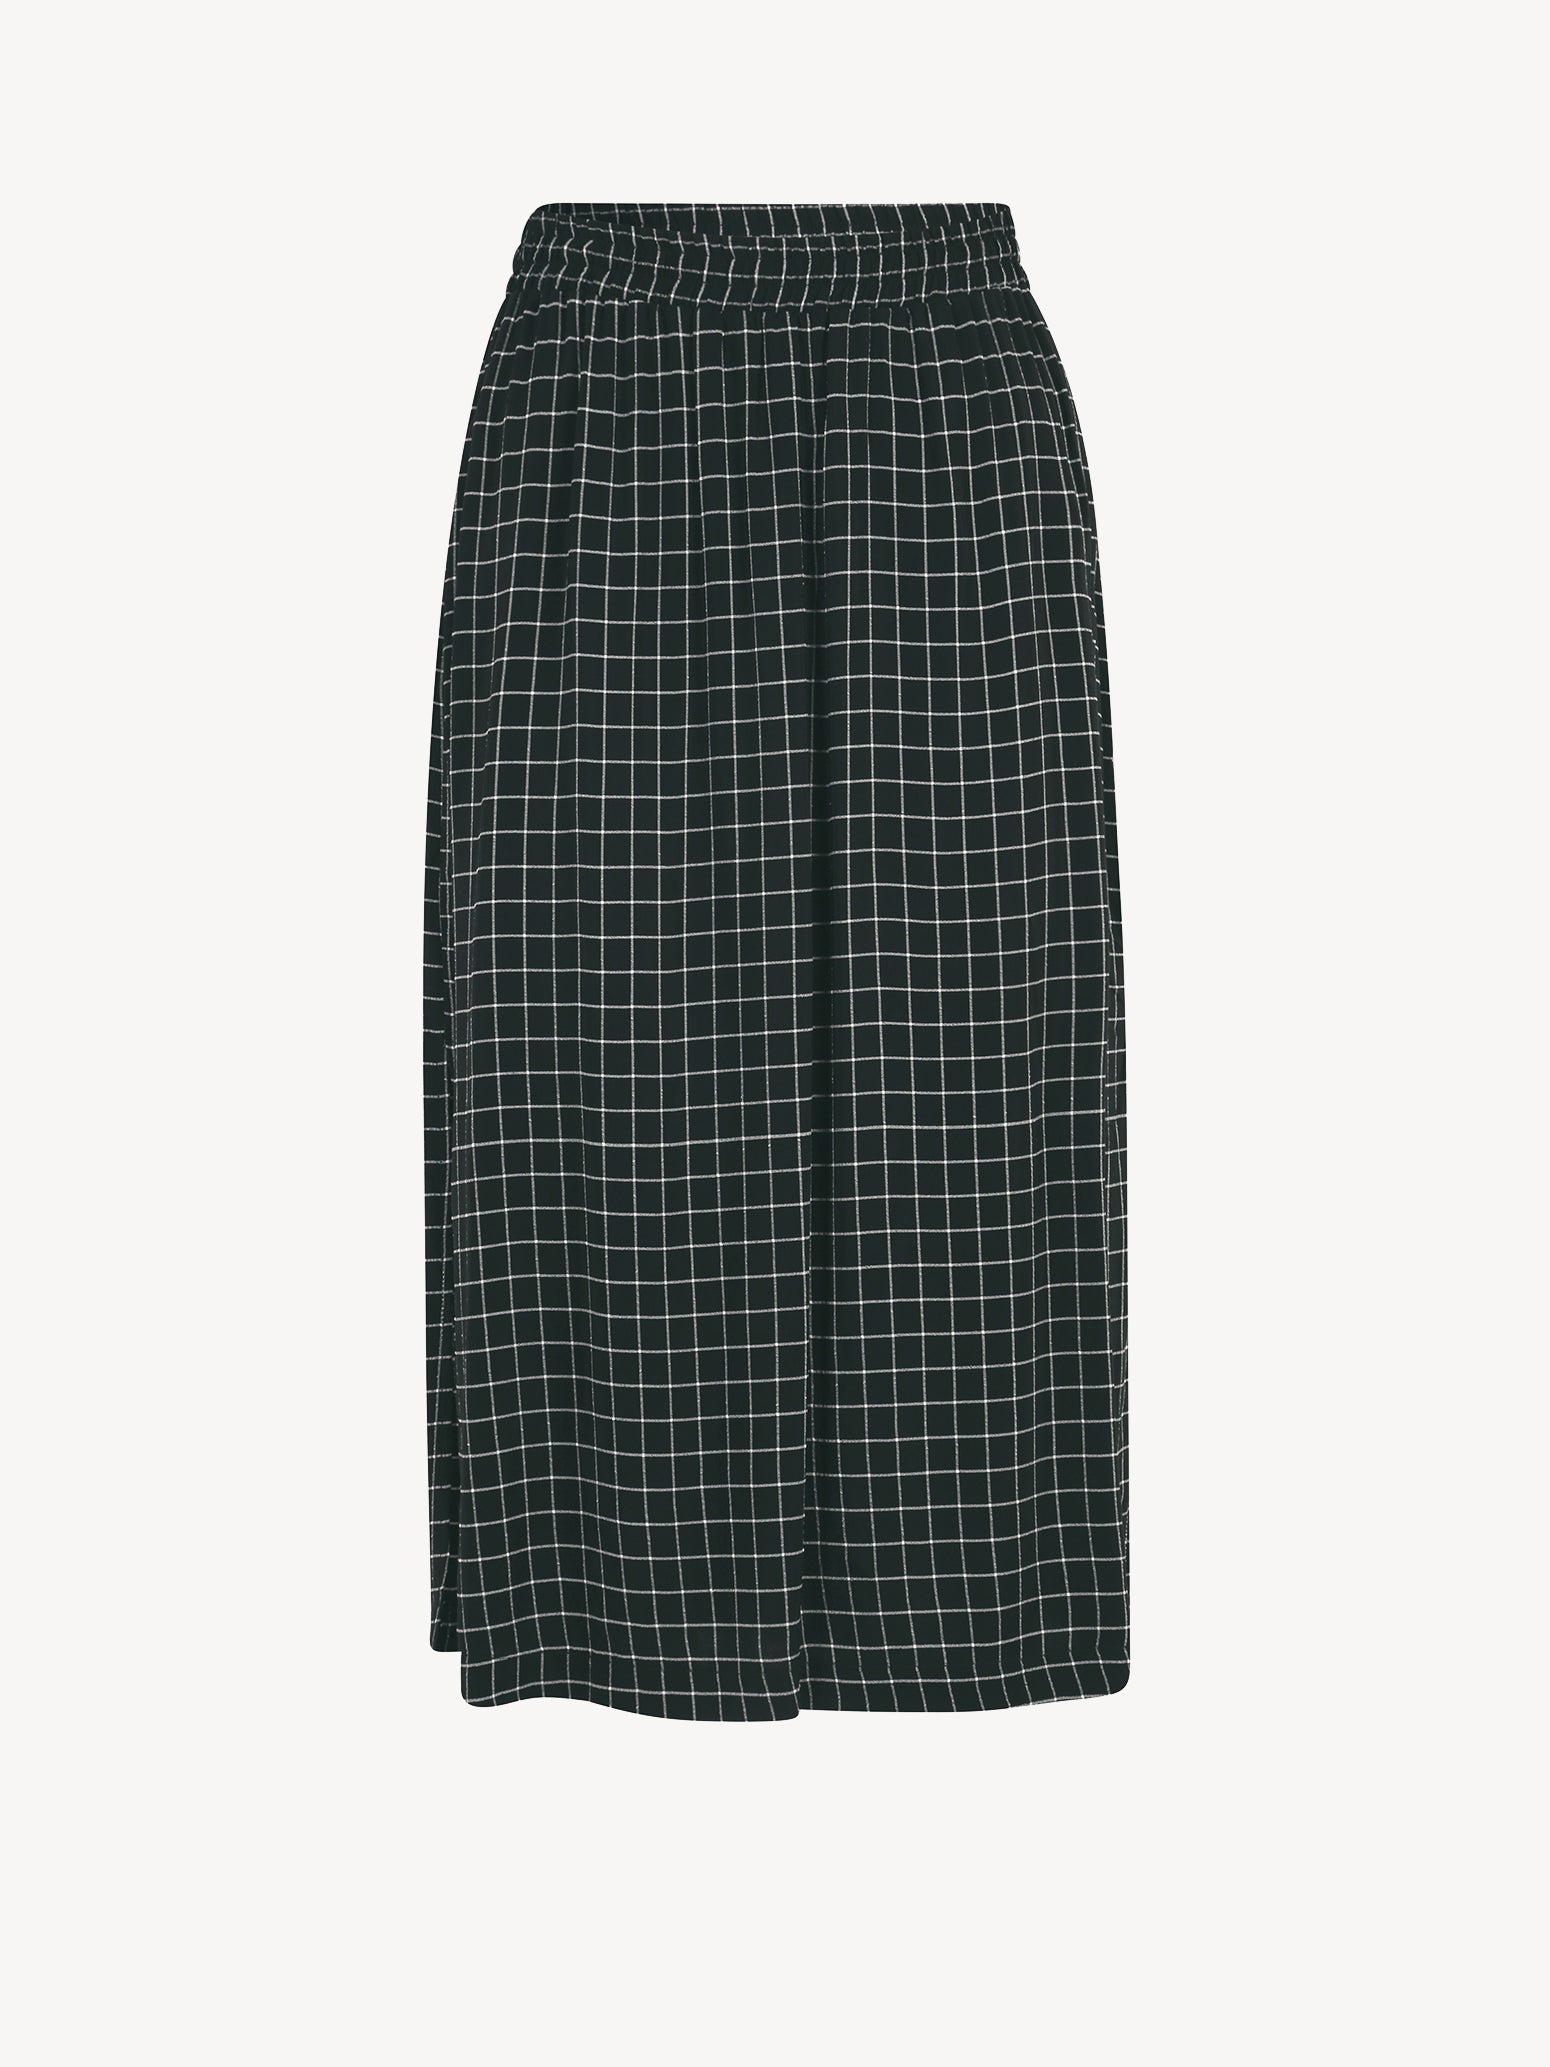 Abilene Skirt With Side Slit in Black Beauty Check Röcke Tamaris   